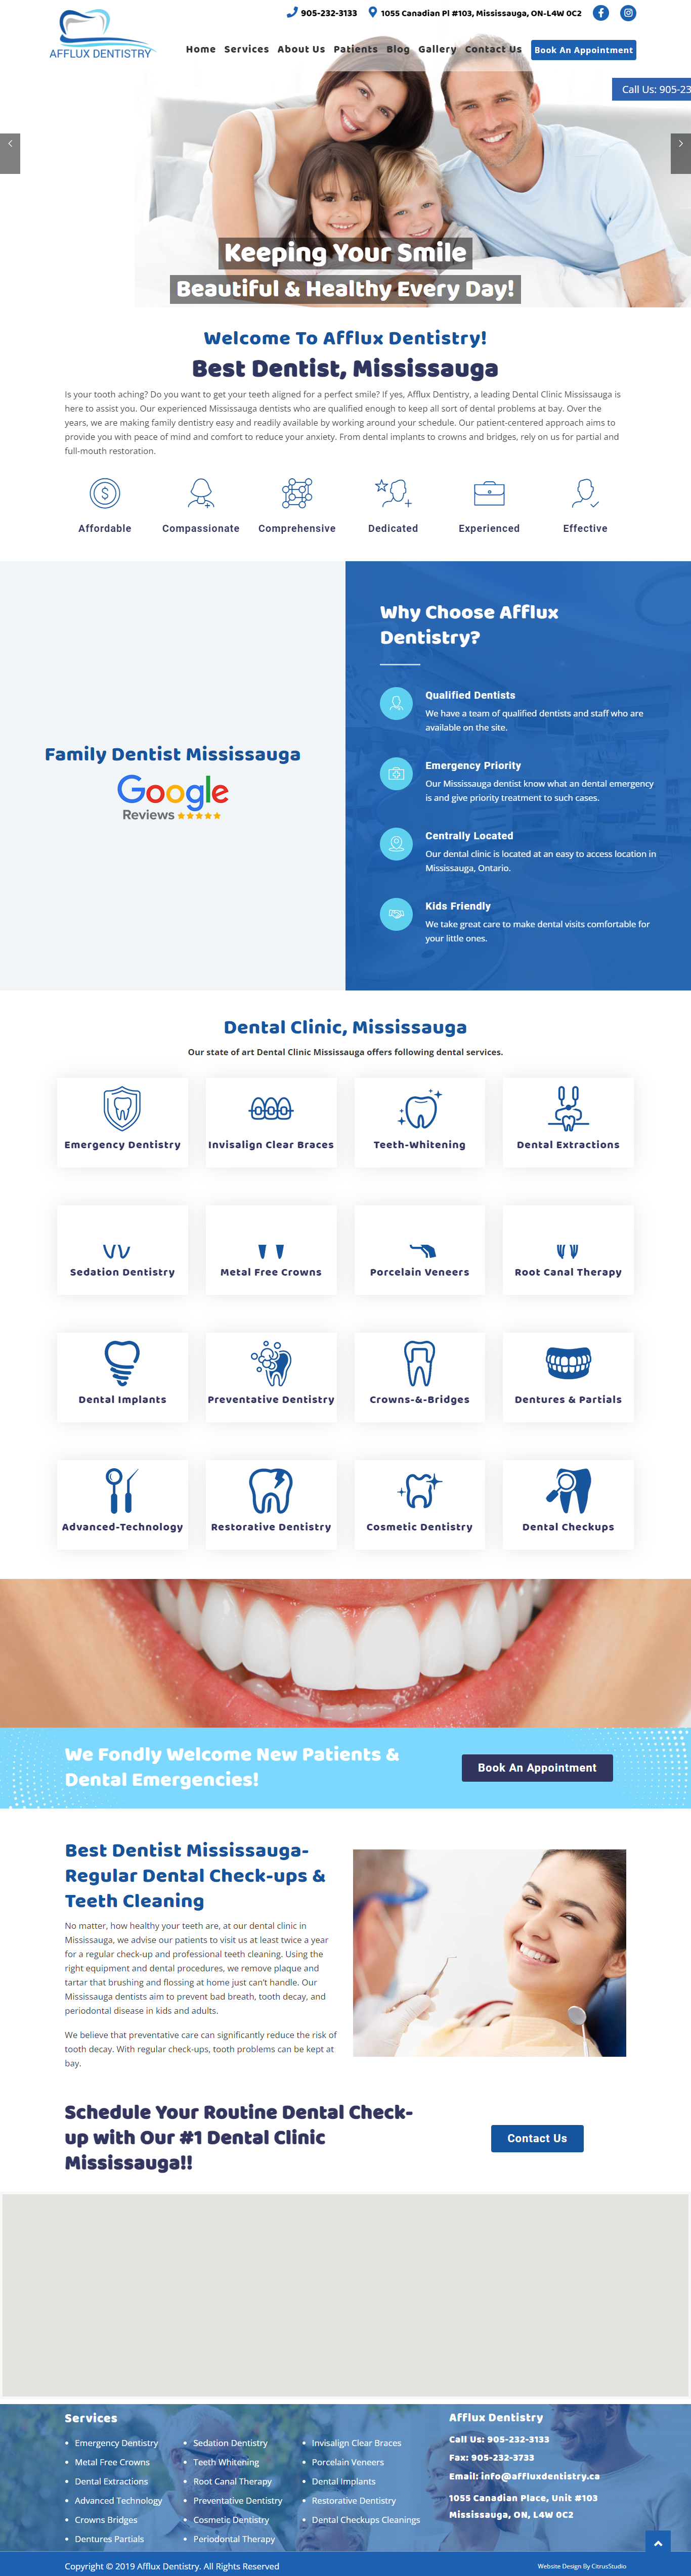 afflux dentistry digital marketing portfolio